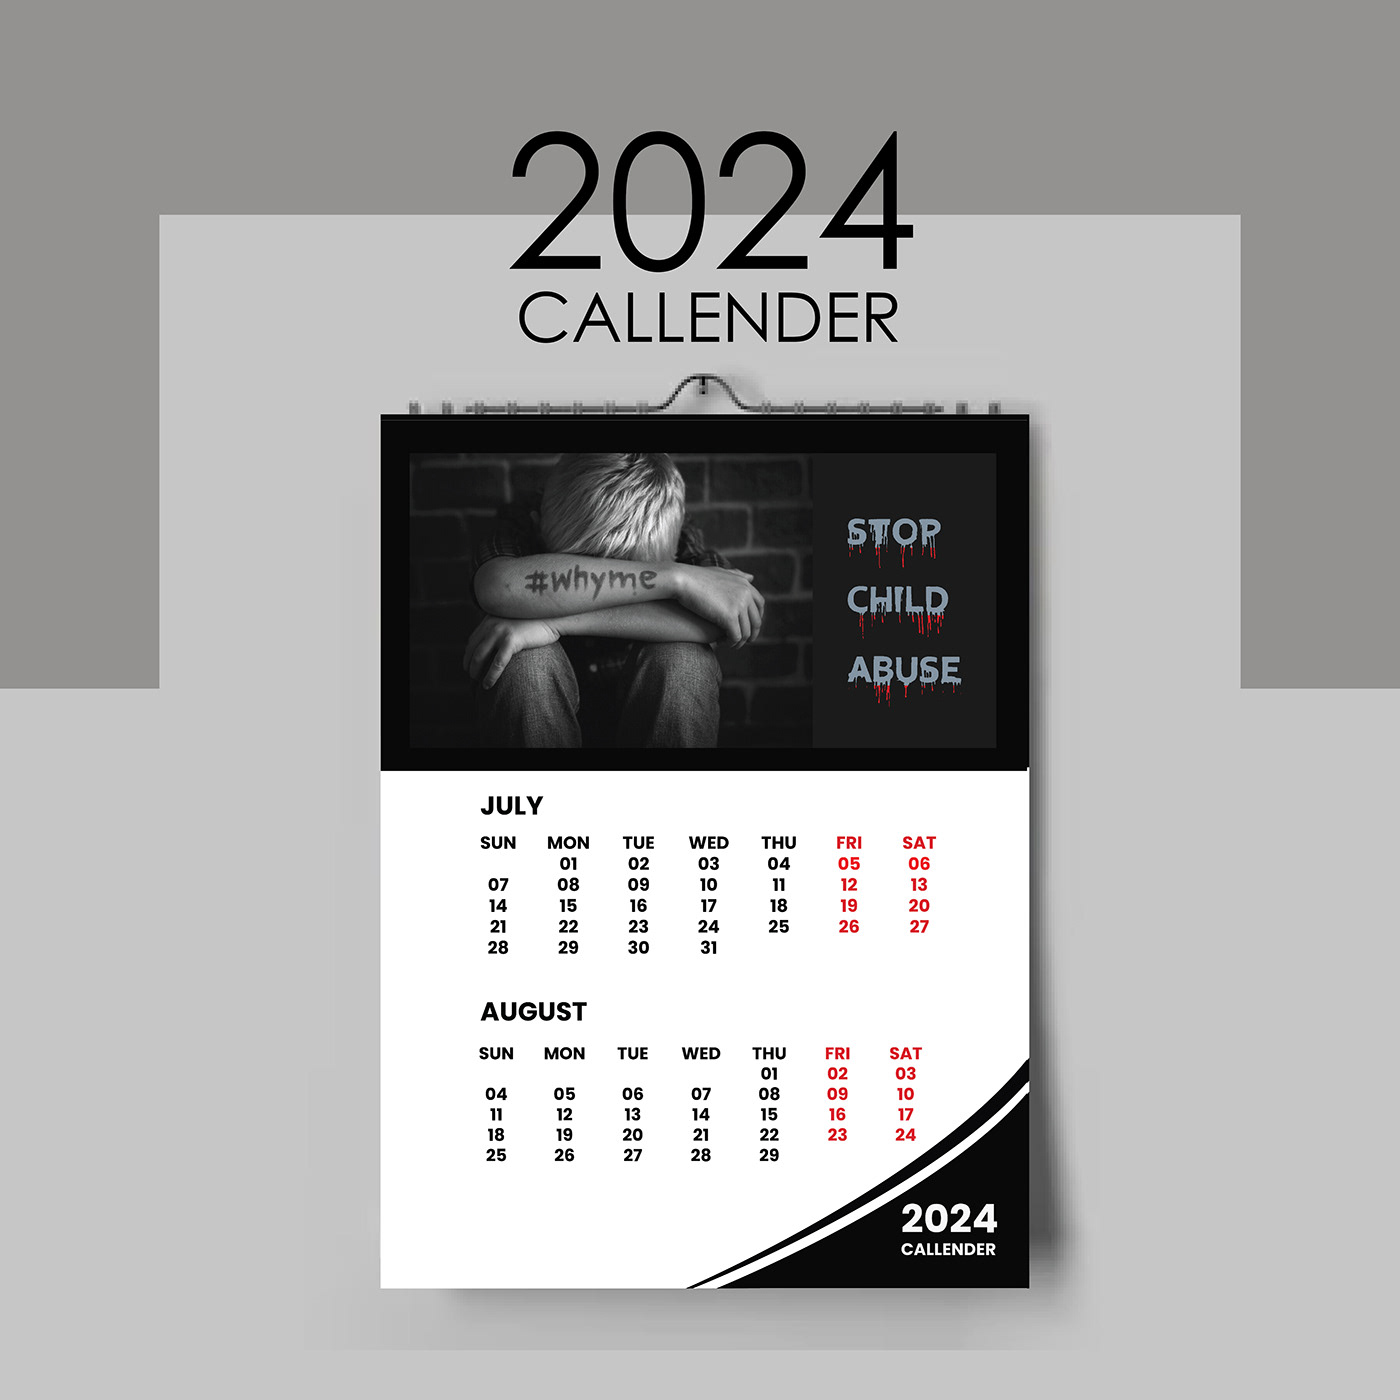 Callender 2024 calendar 2024 calendar design child abuse callender design callender graphics